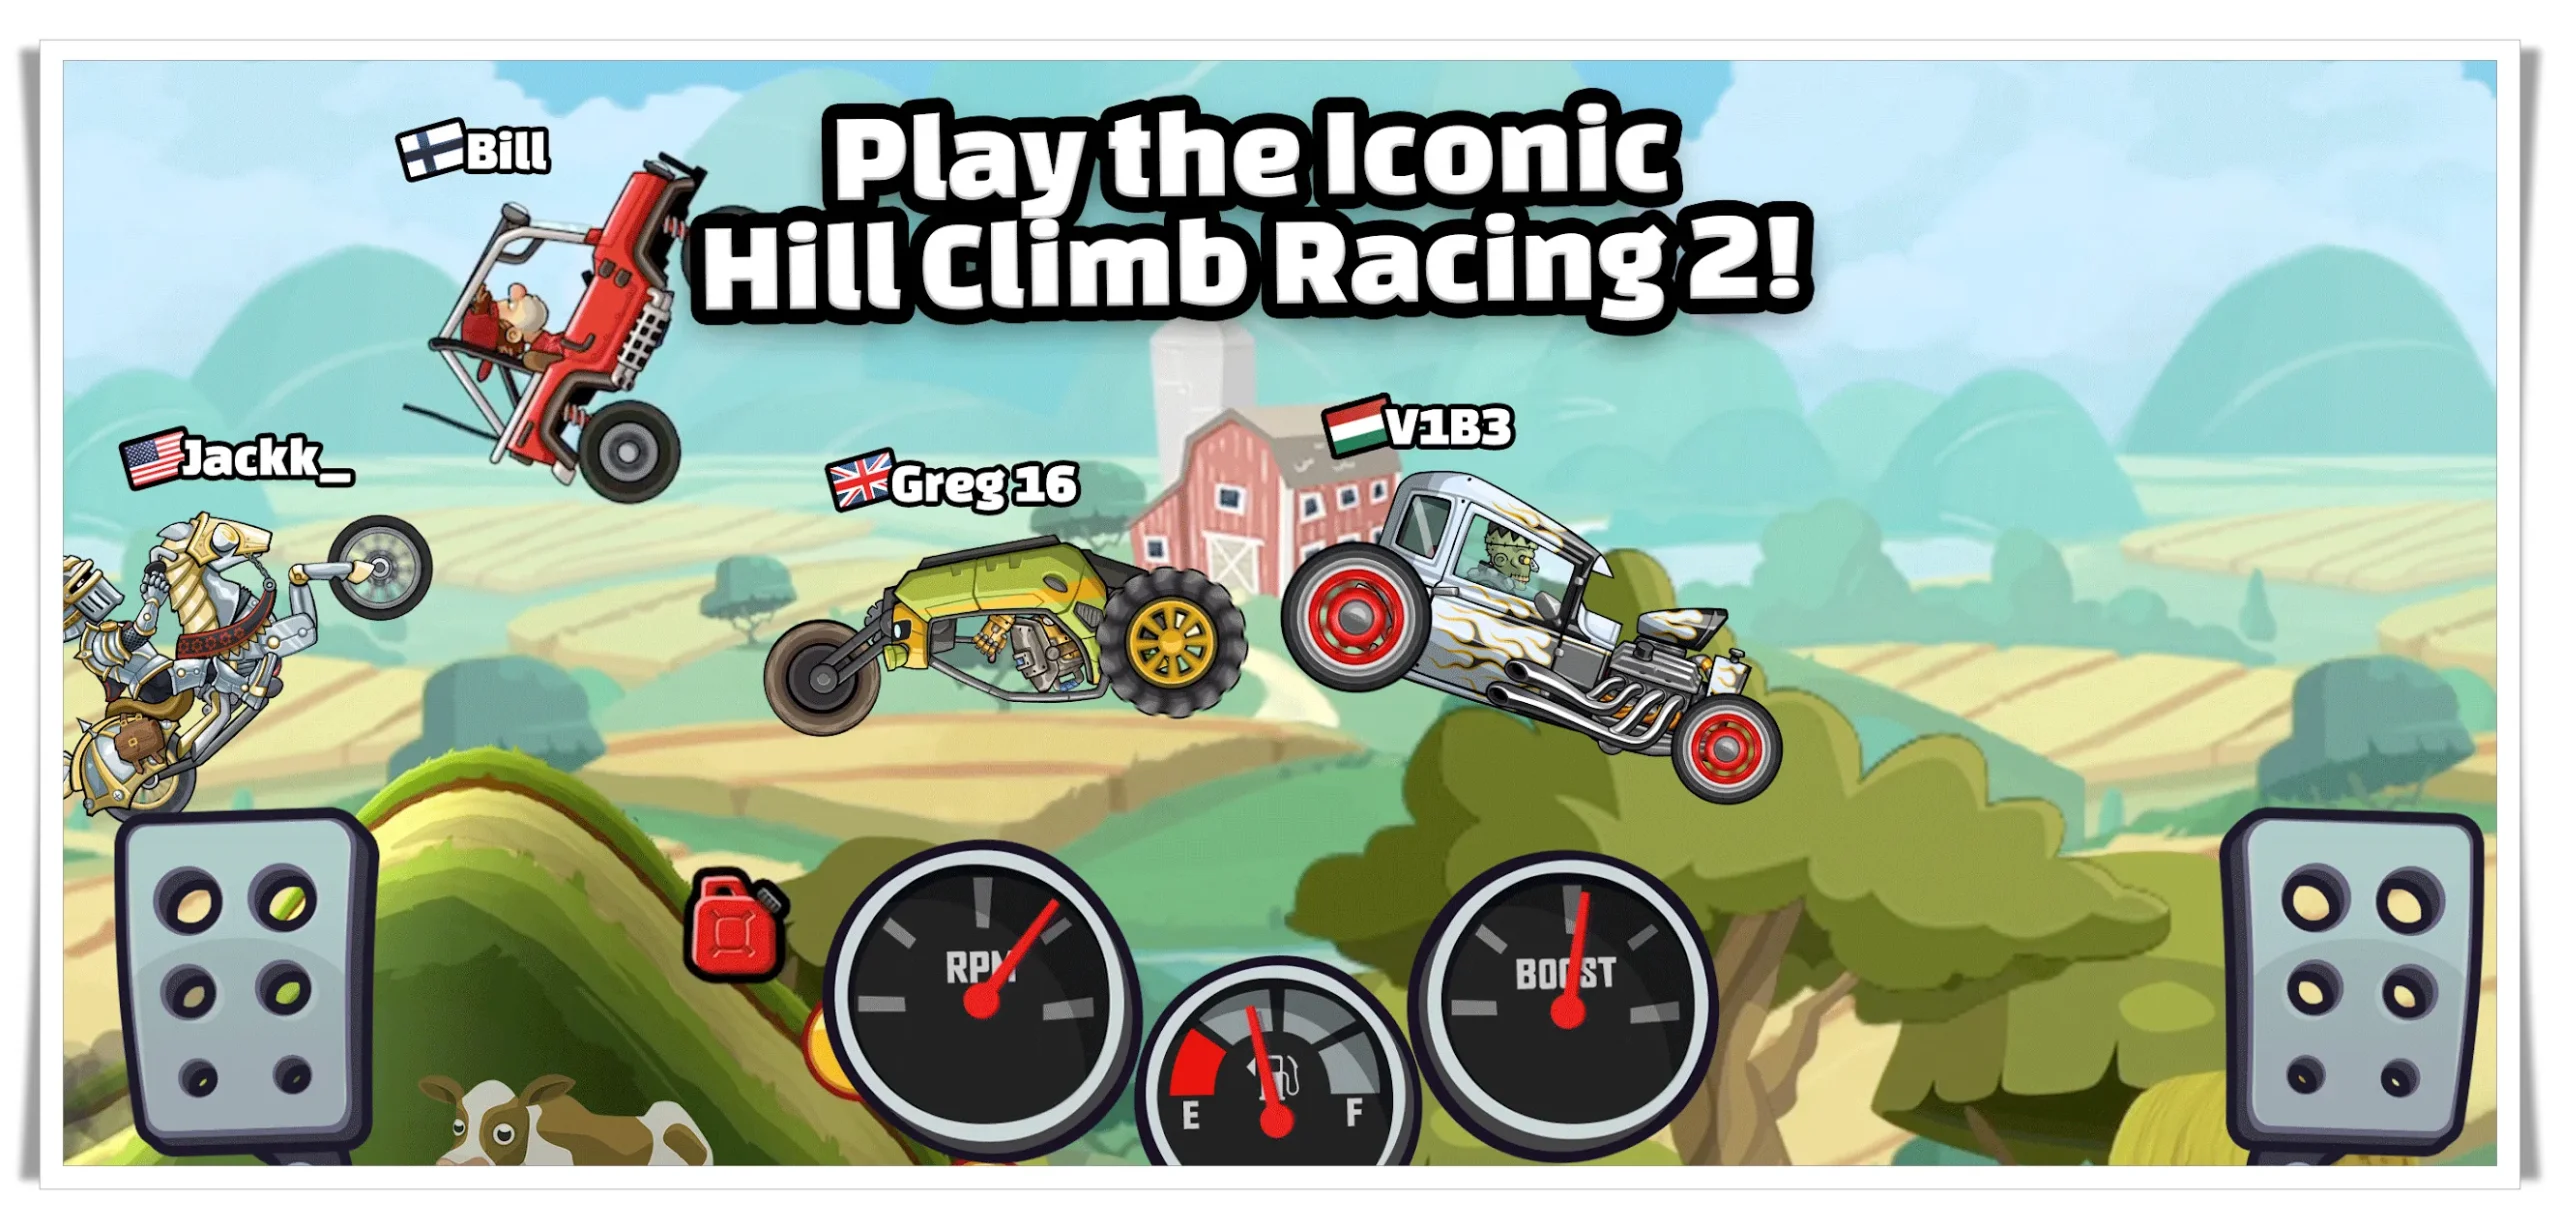 Hill Climb Racing 2 - NEW UPDATE 1.57.0 (TUTORIAL) 